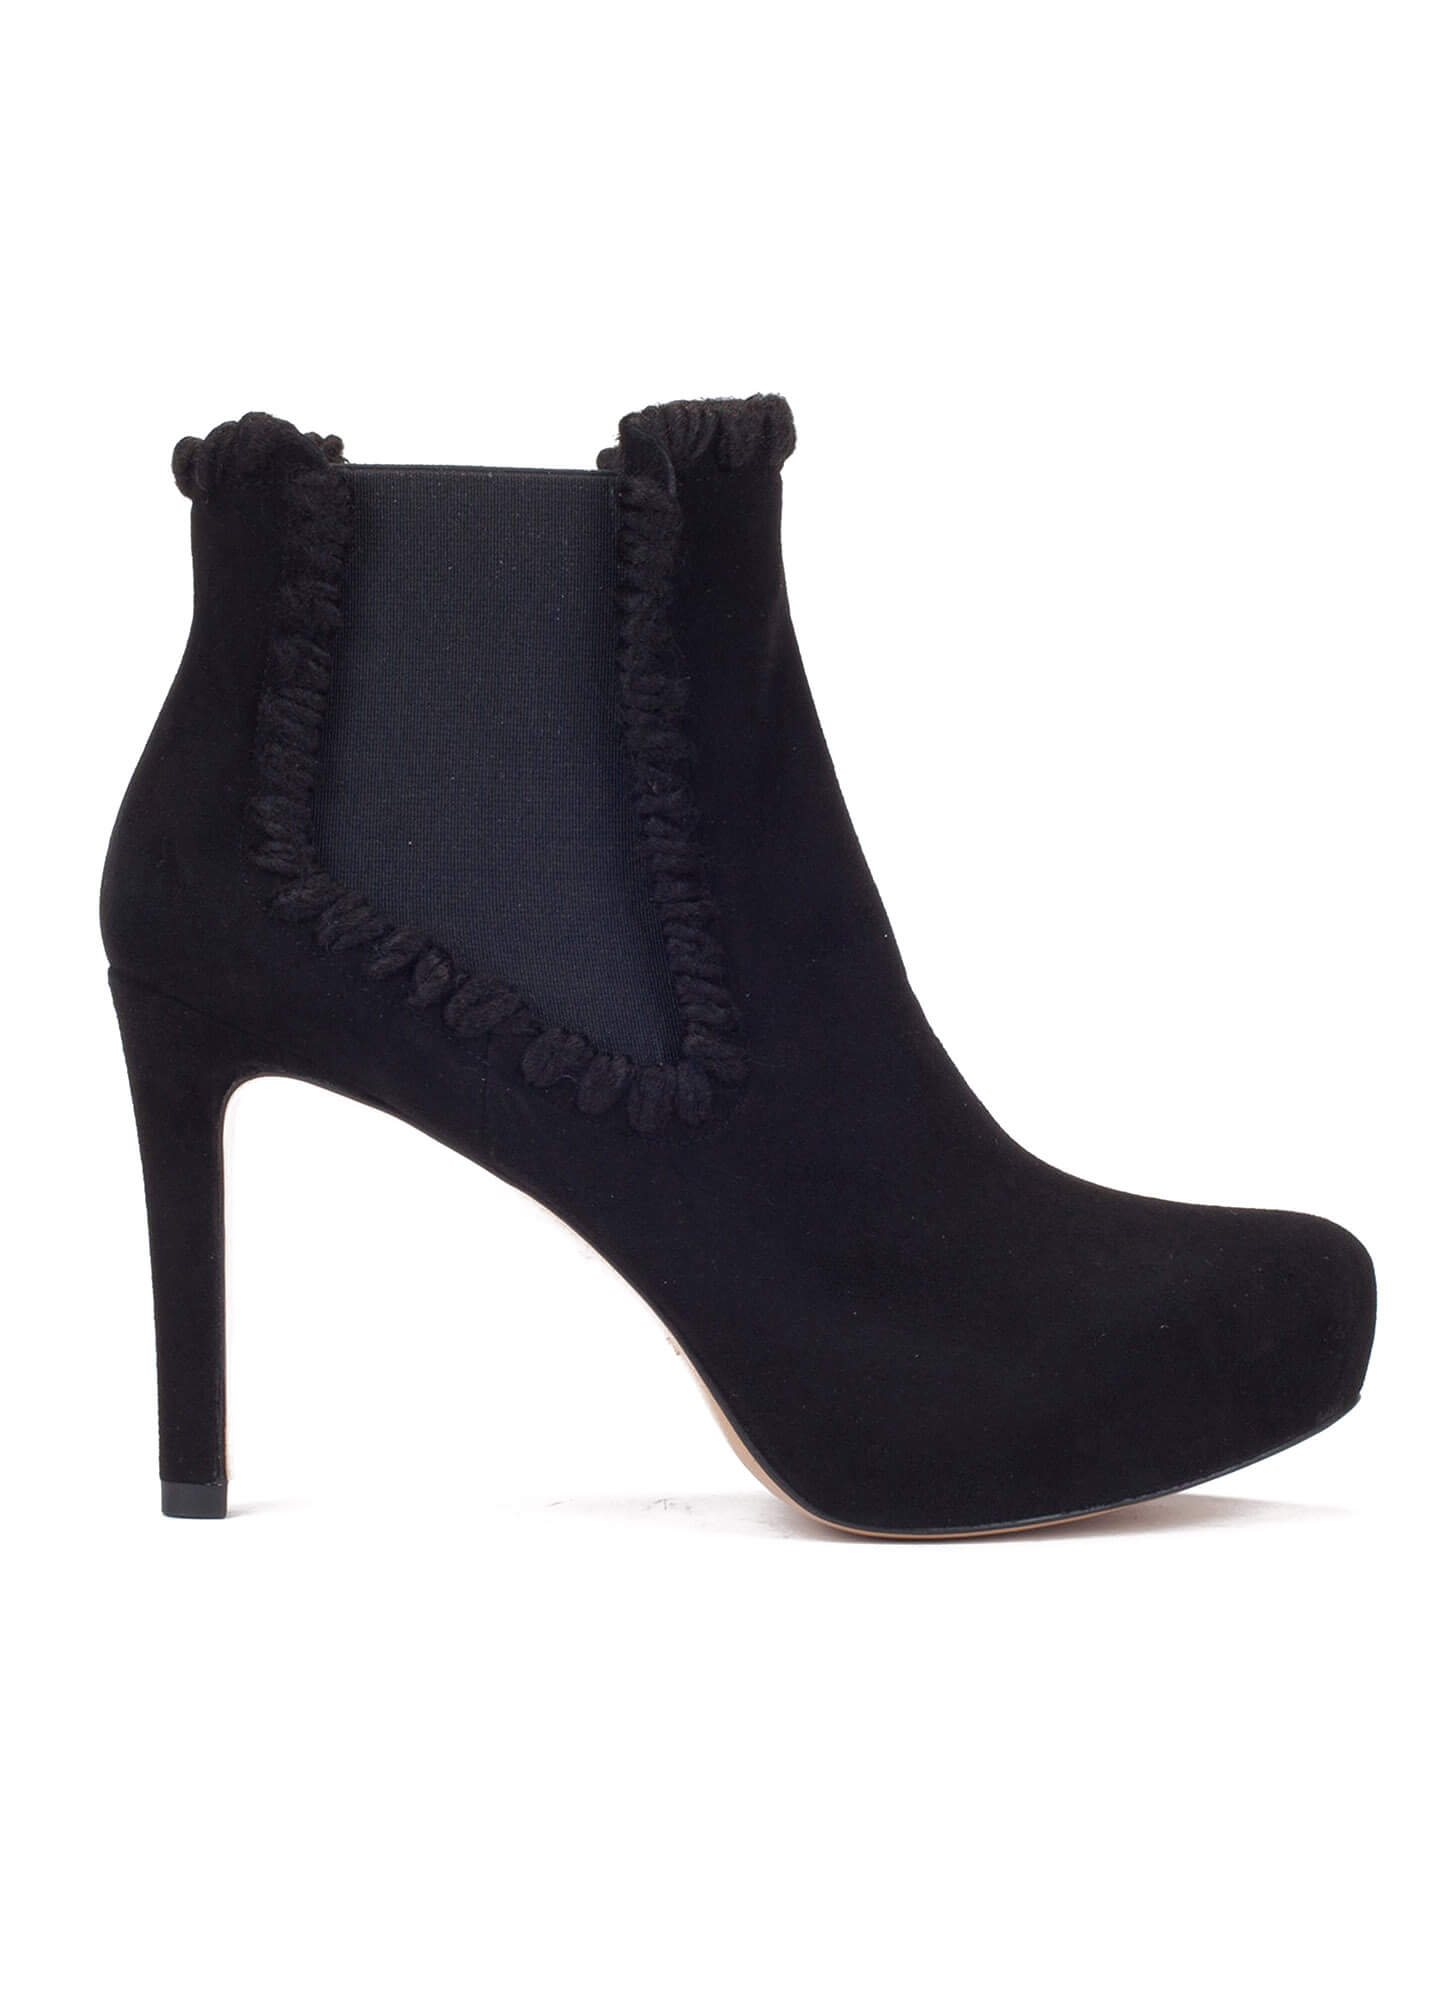 Mid heel ankle boots in black suede - online shoe store Pura Lopez ...